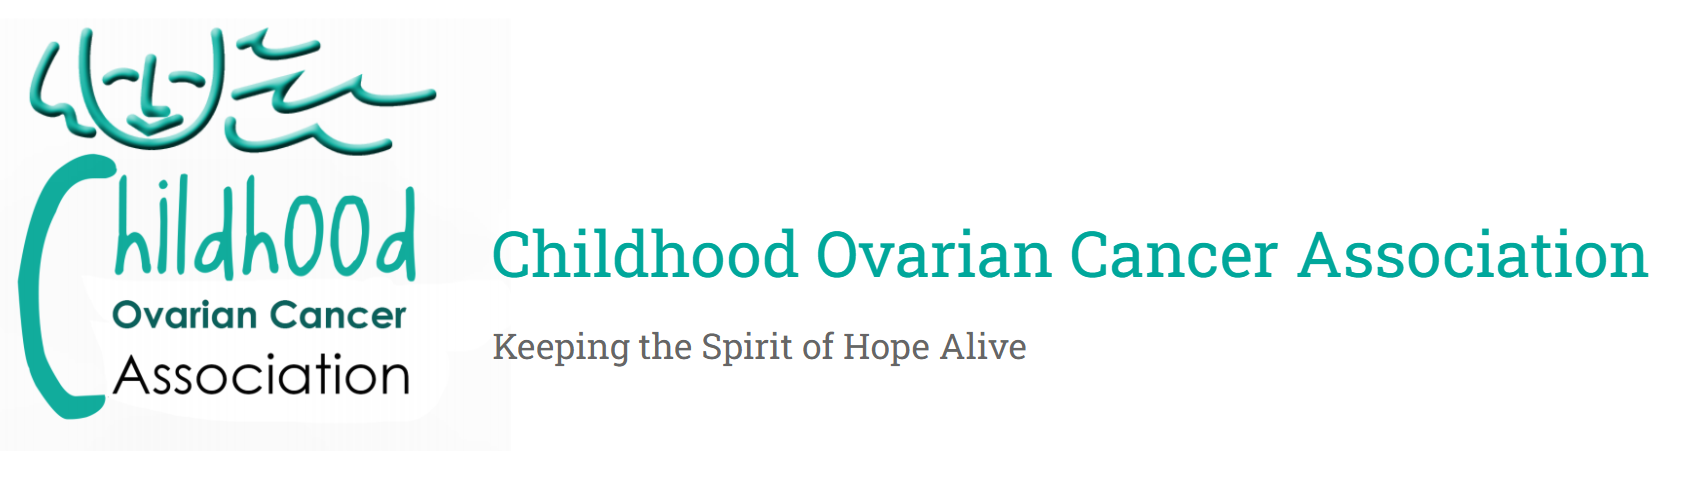 Childhood Ovarian Cancer Association